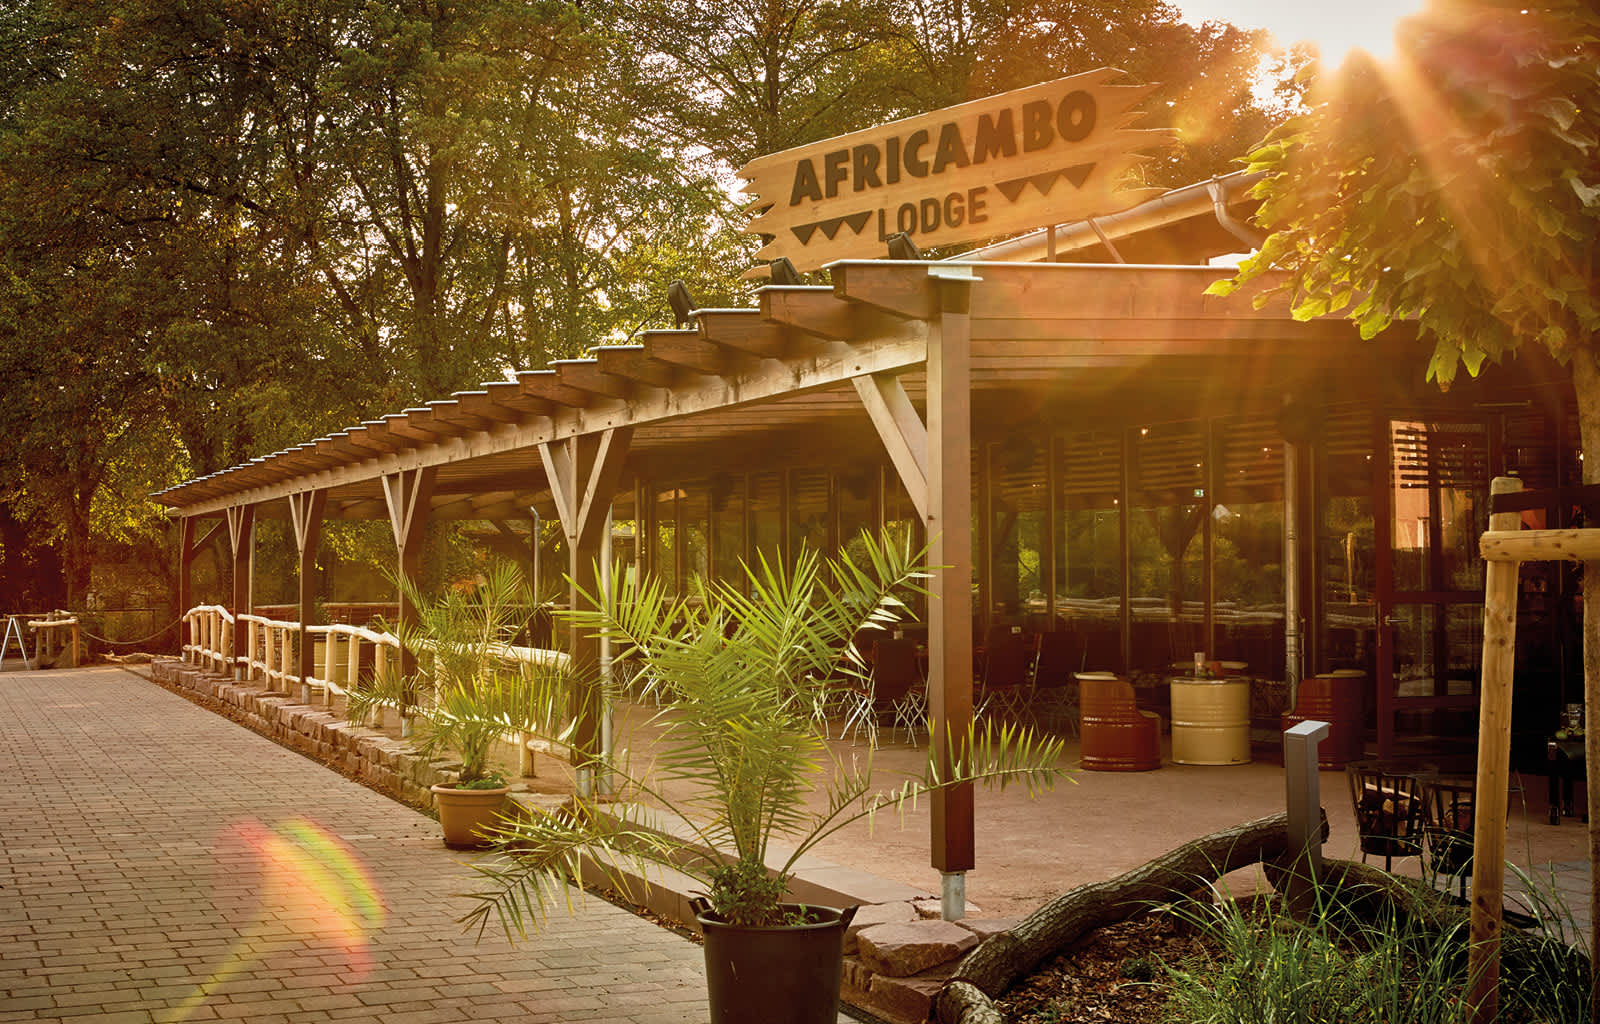 Africambo Lodge in der Abendsonne